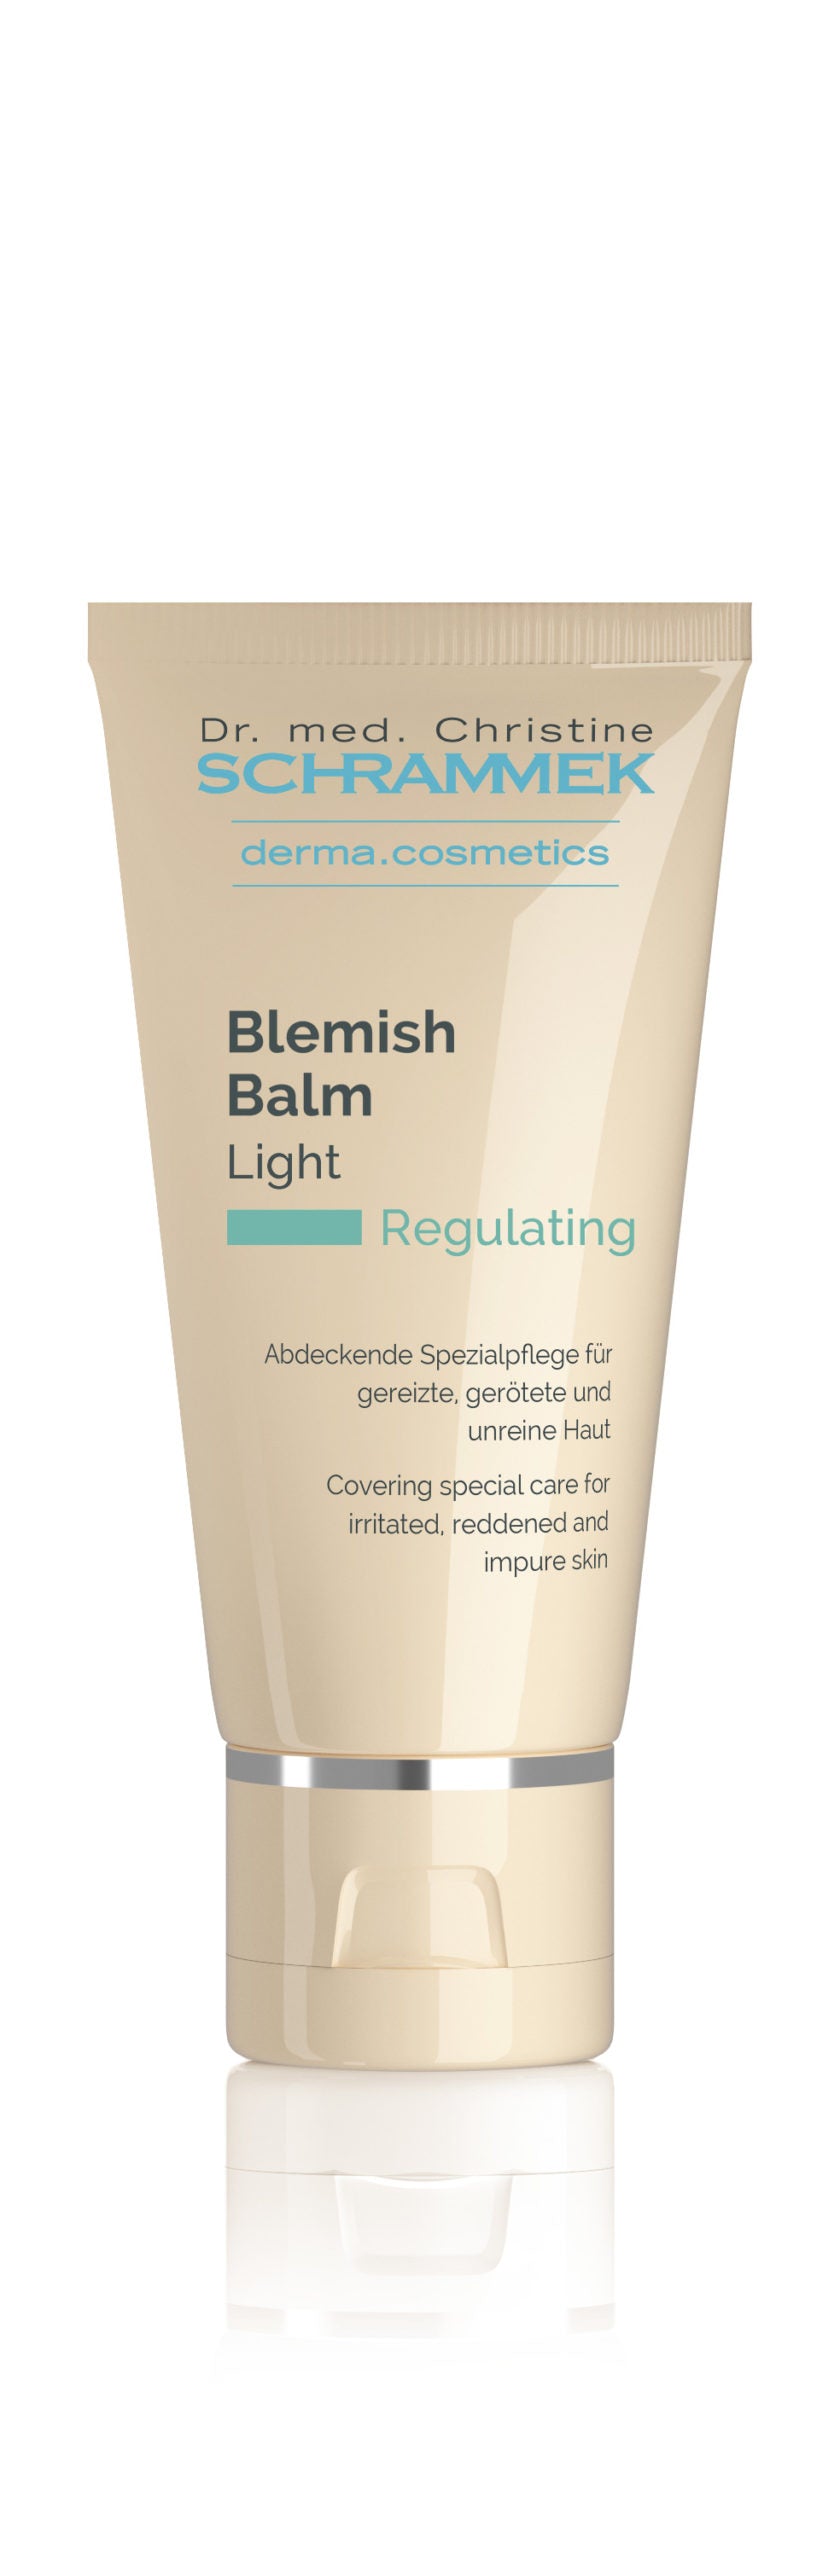 Blemish Balm LIGHT - 40ml